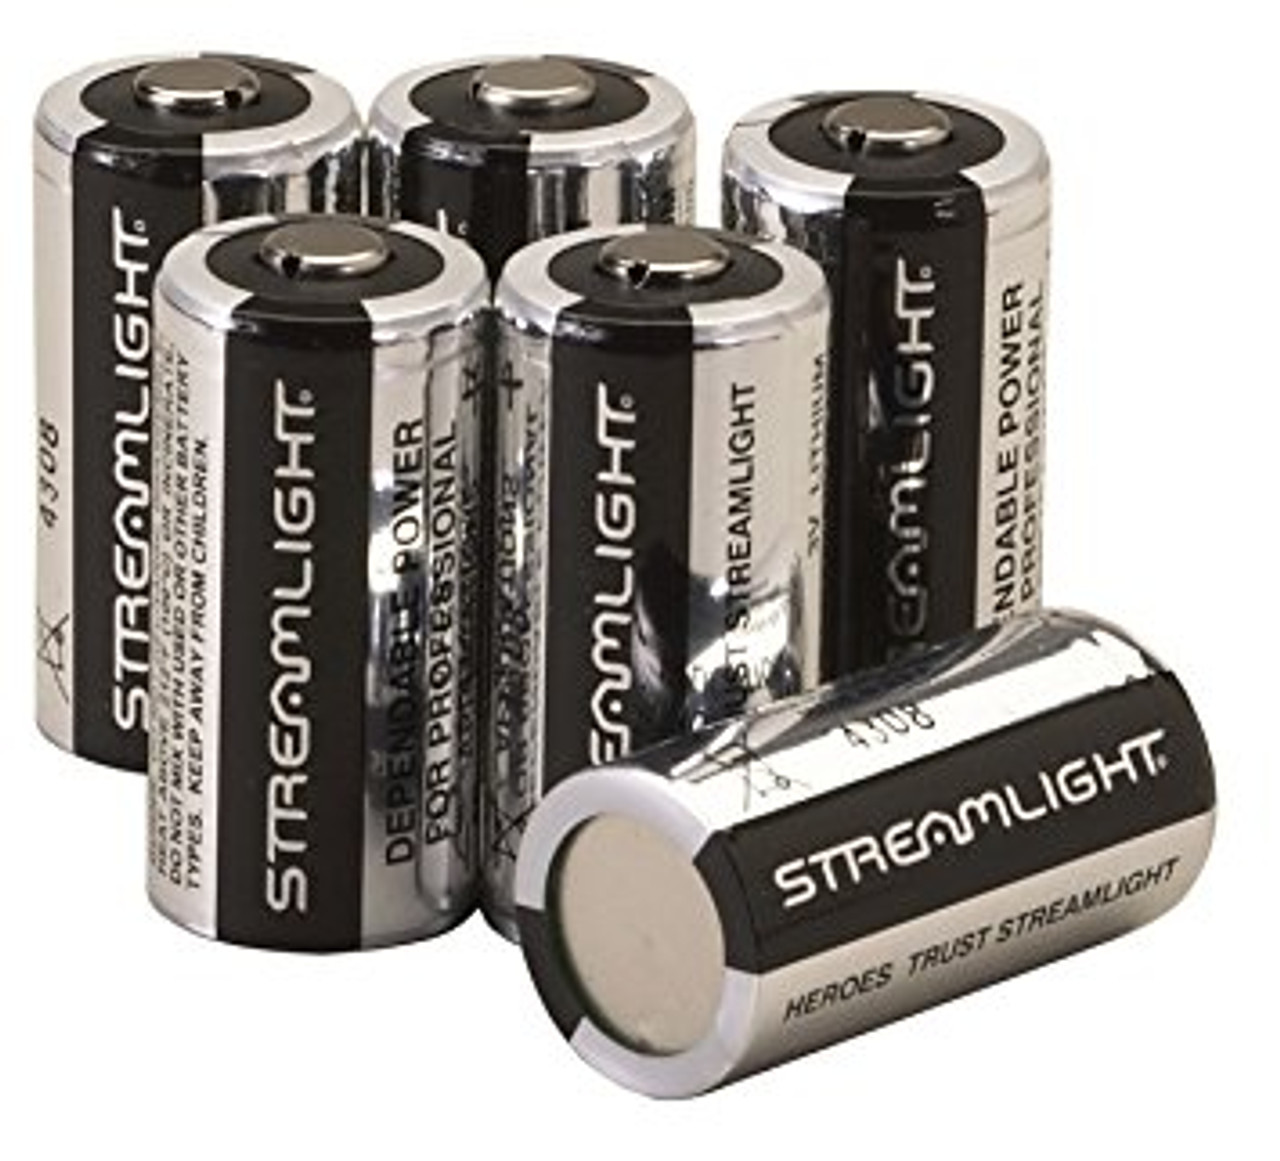 Streamlight Lithium CR123, 12-pack - Nalpak, Inc.